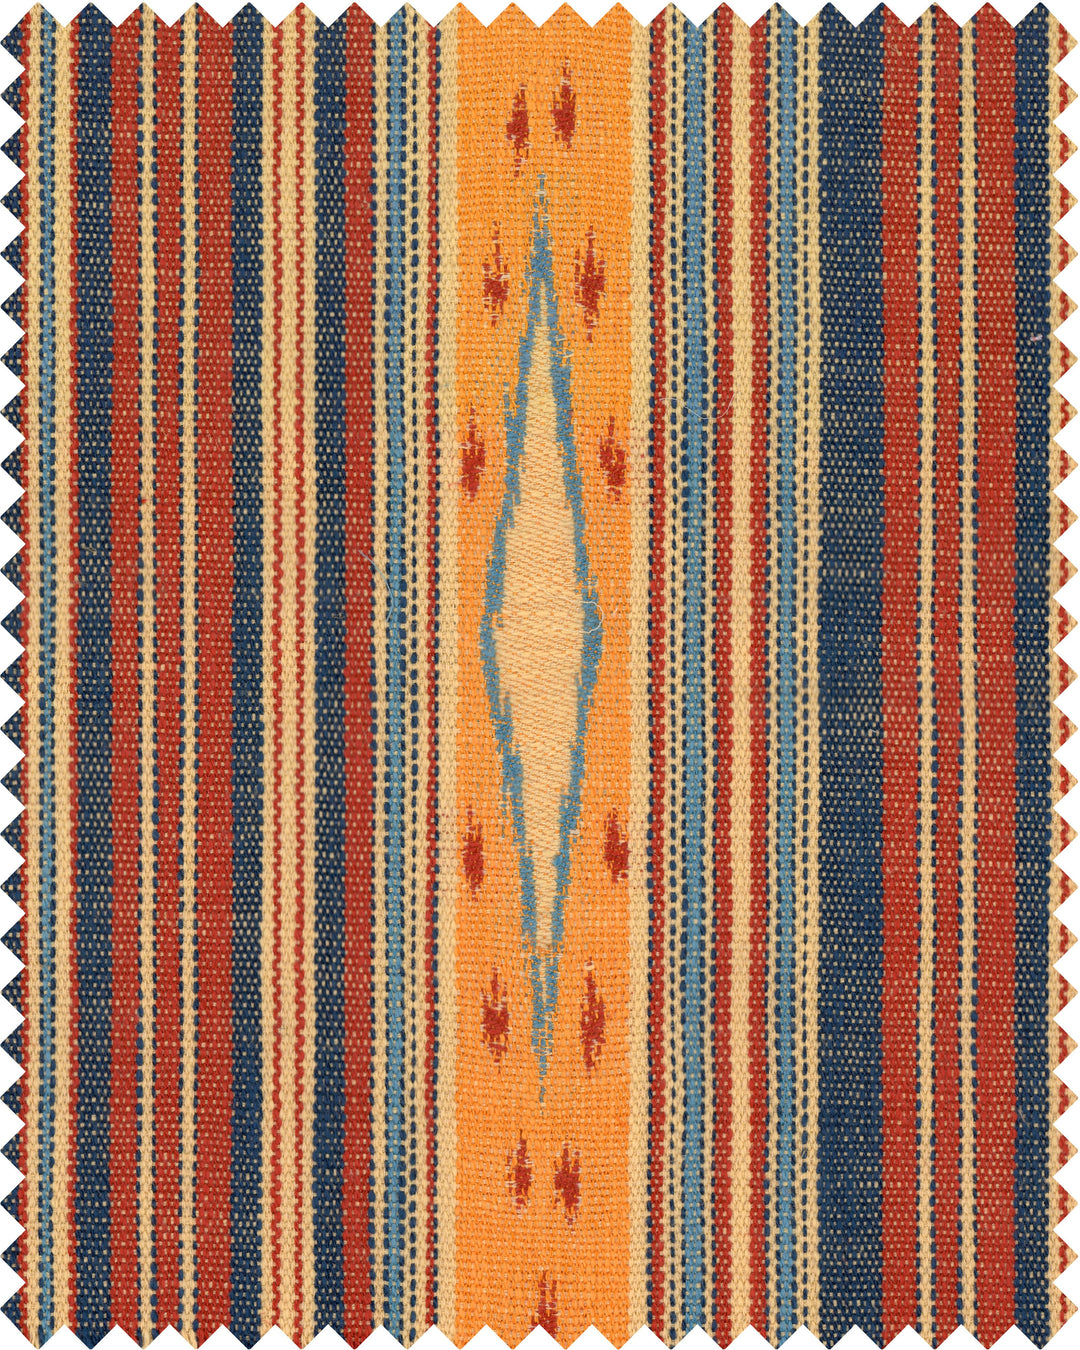 mind-the-gap-woodstock-fabrics-neyshabour-woven-striped-ikat-yellow-blue-red-design-fabric